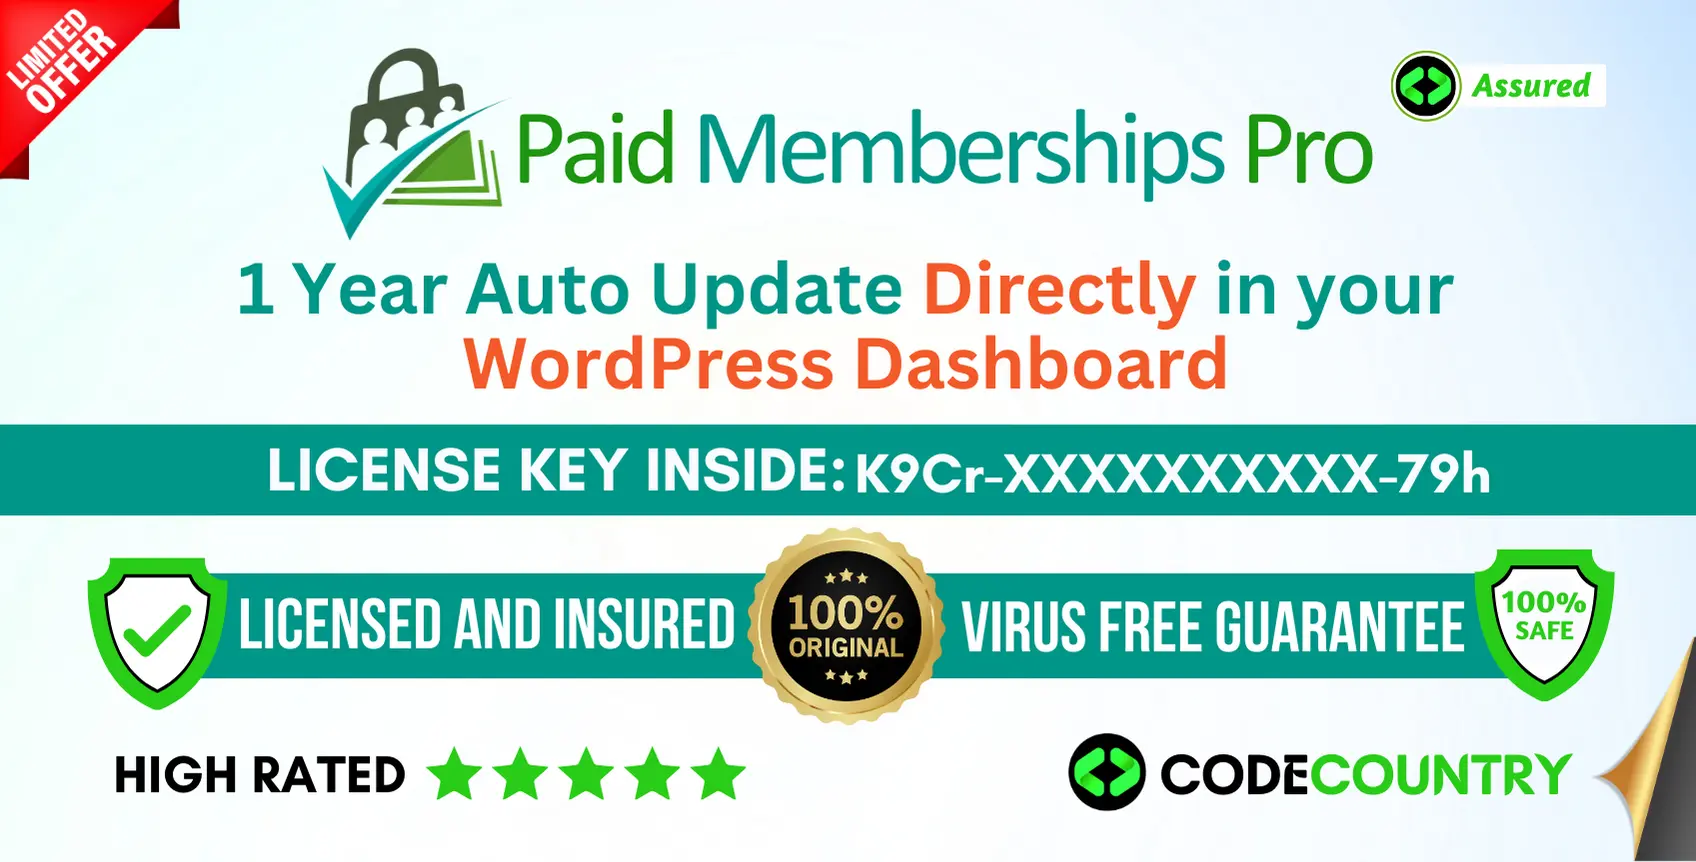 Paid Memberships Pro With Original License Key